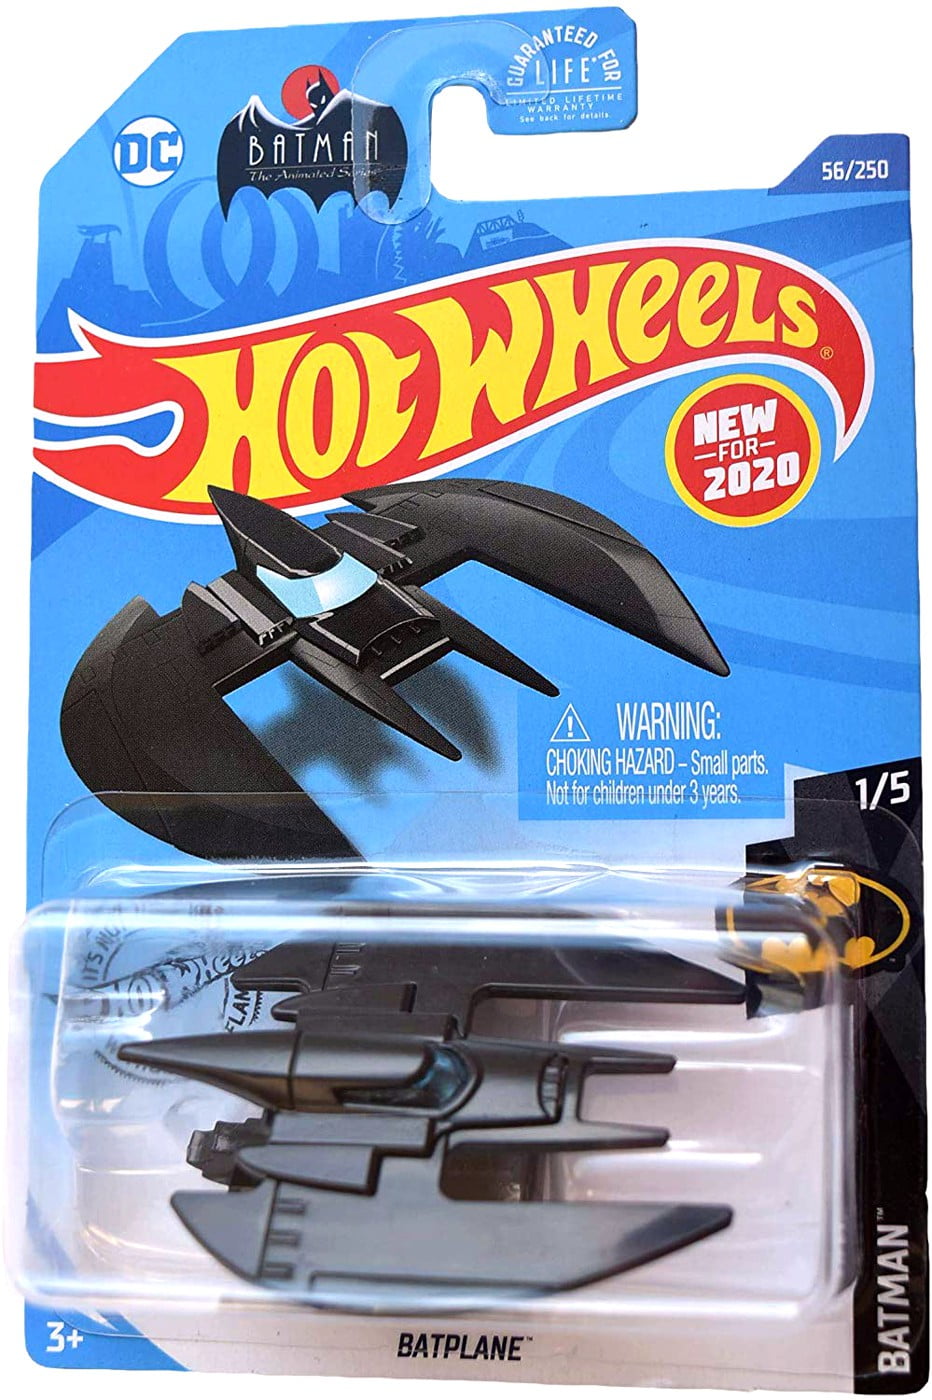 Hot wheels Batman Batplane